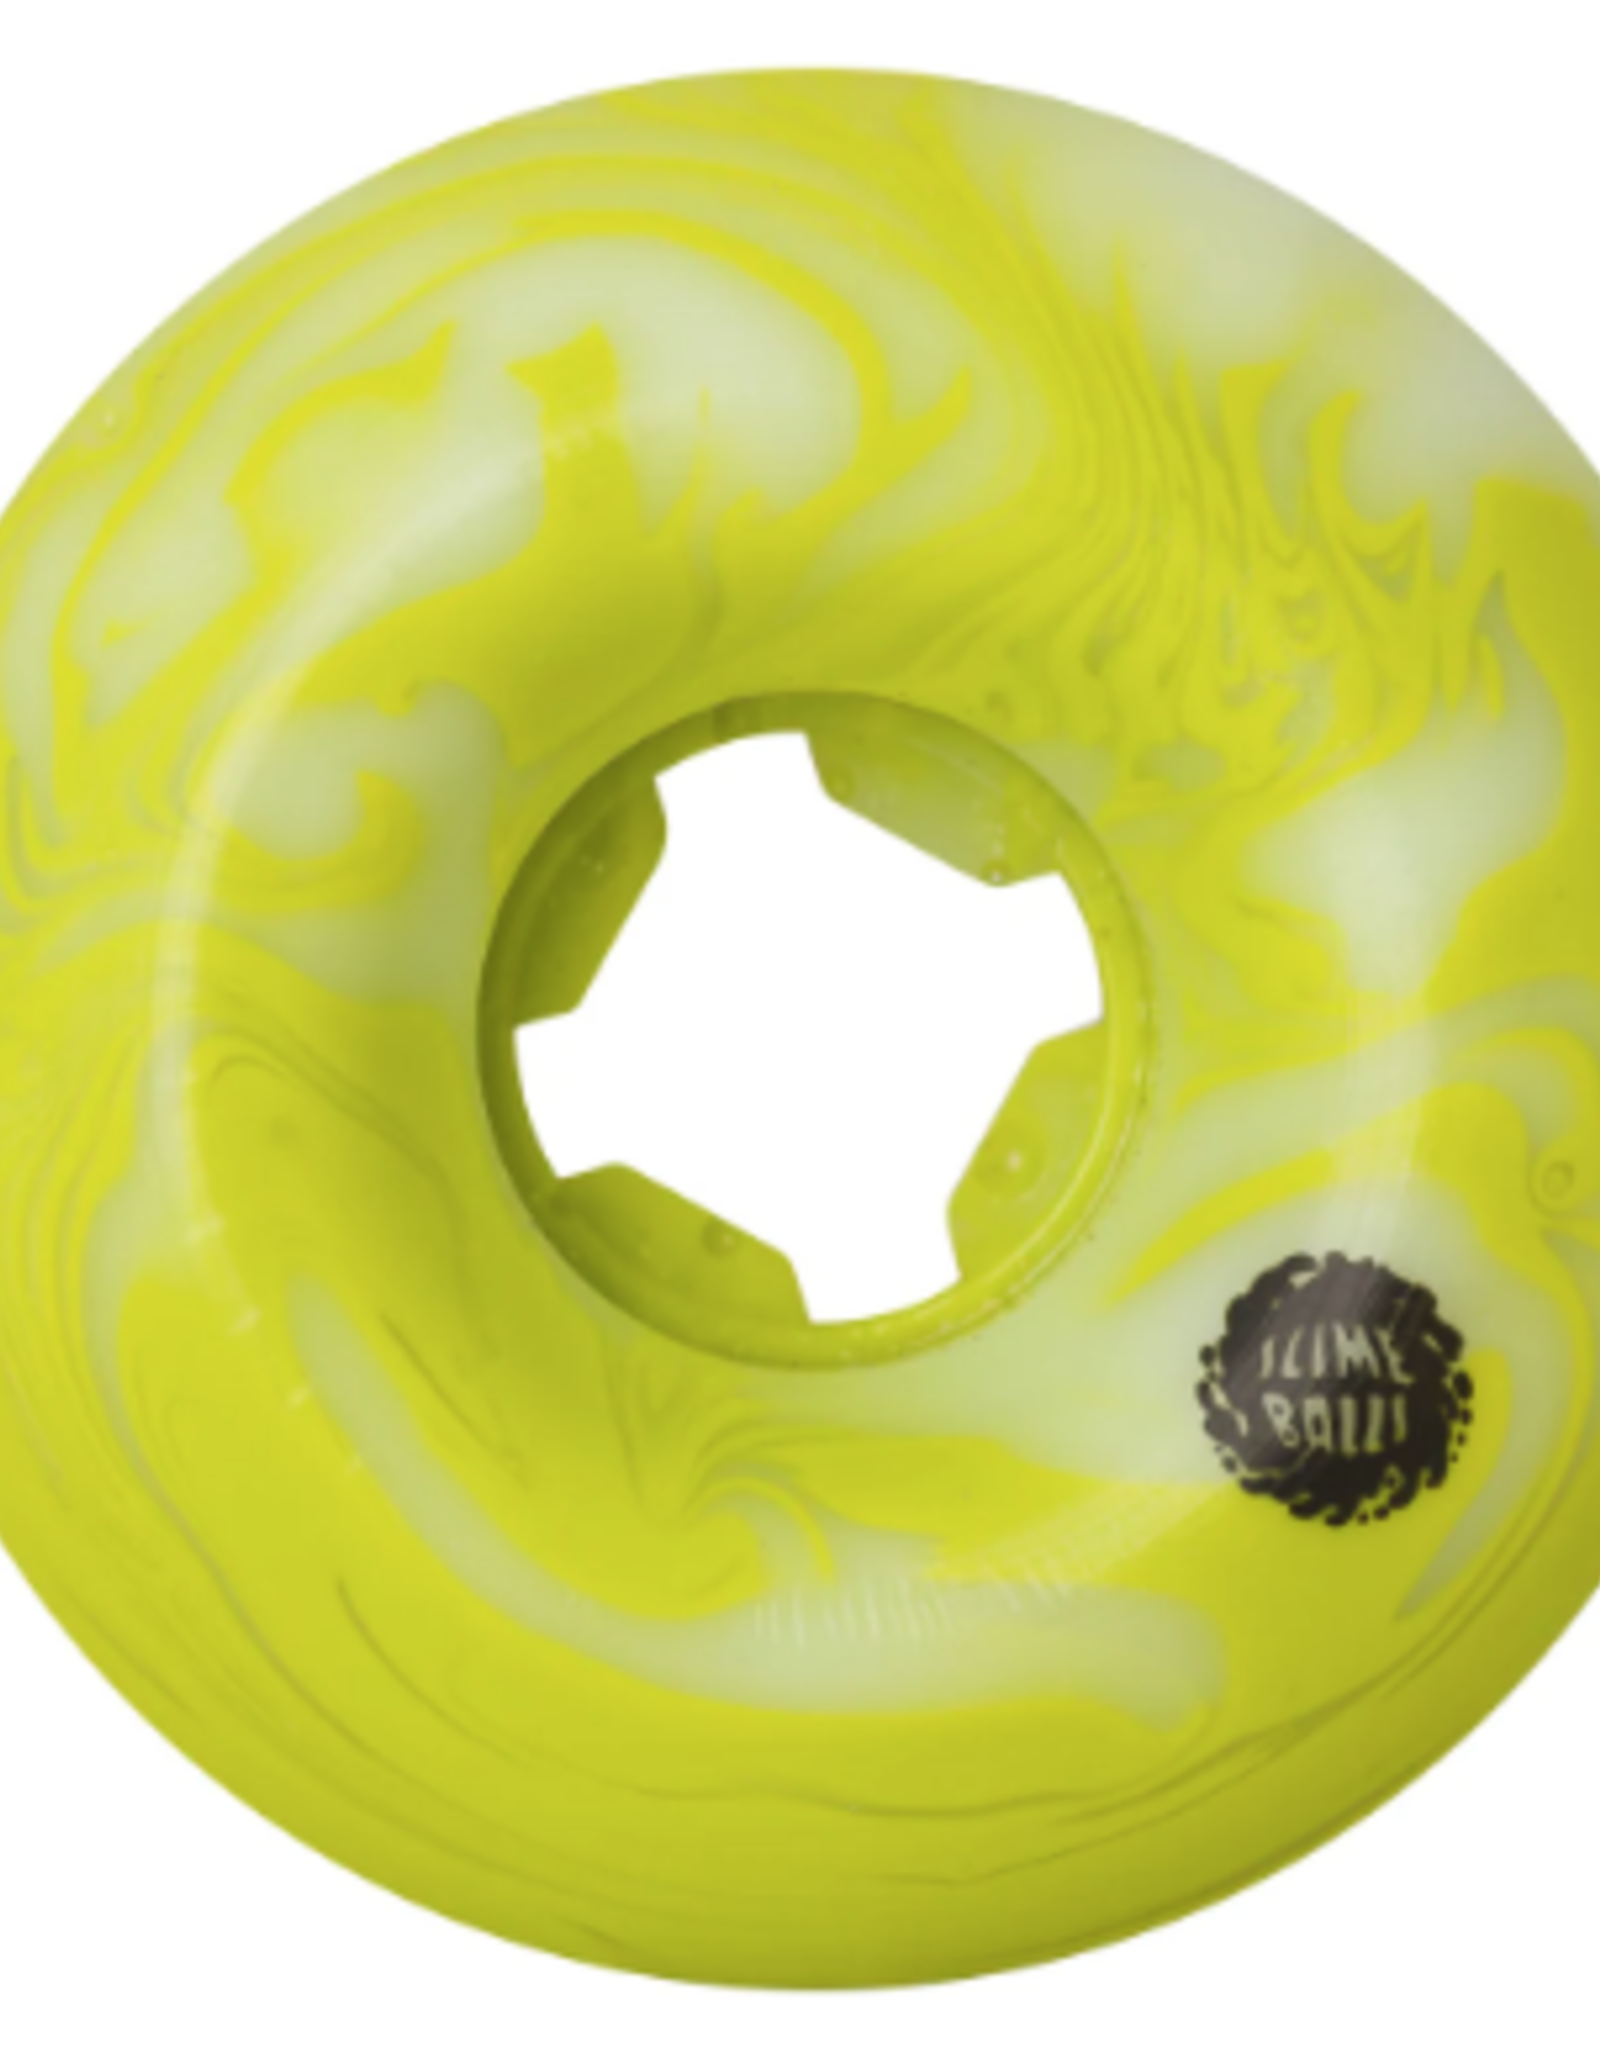 SLIMEBALLS 60mm Snake Vomits Green White Swirl 95a Skateboard Wheels Slime Balls